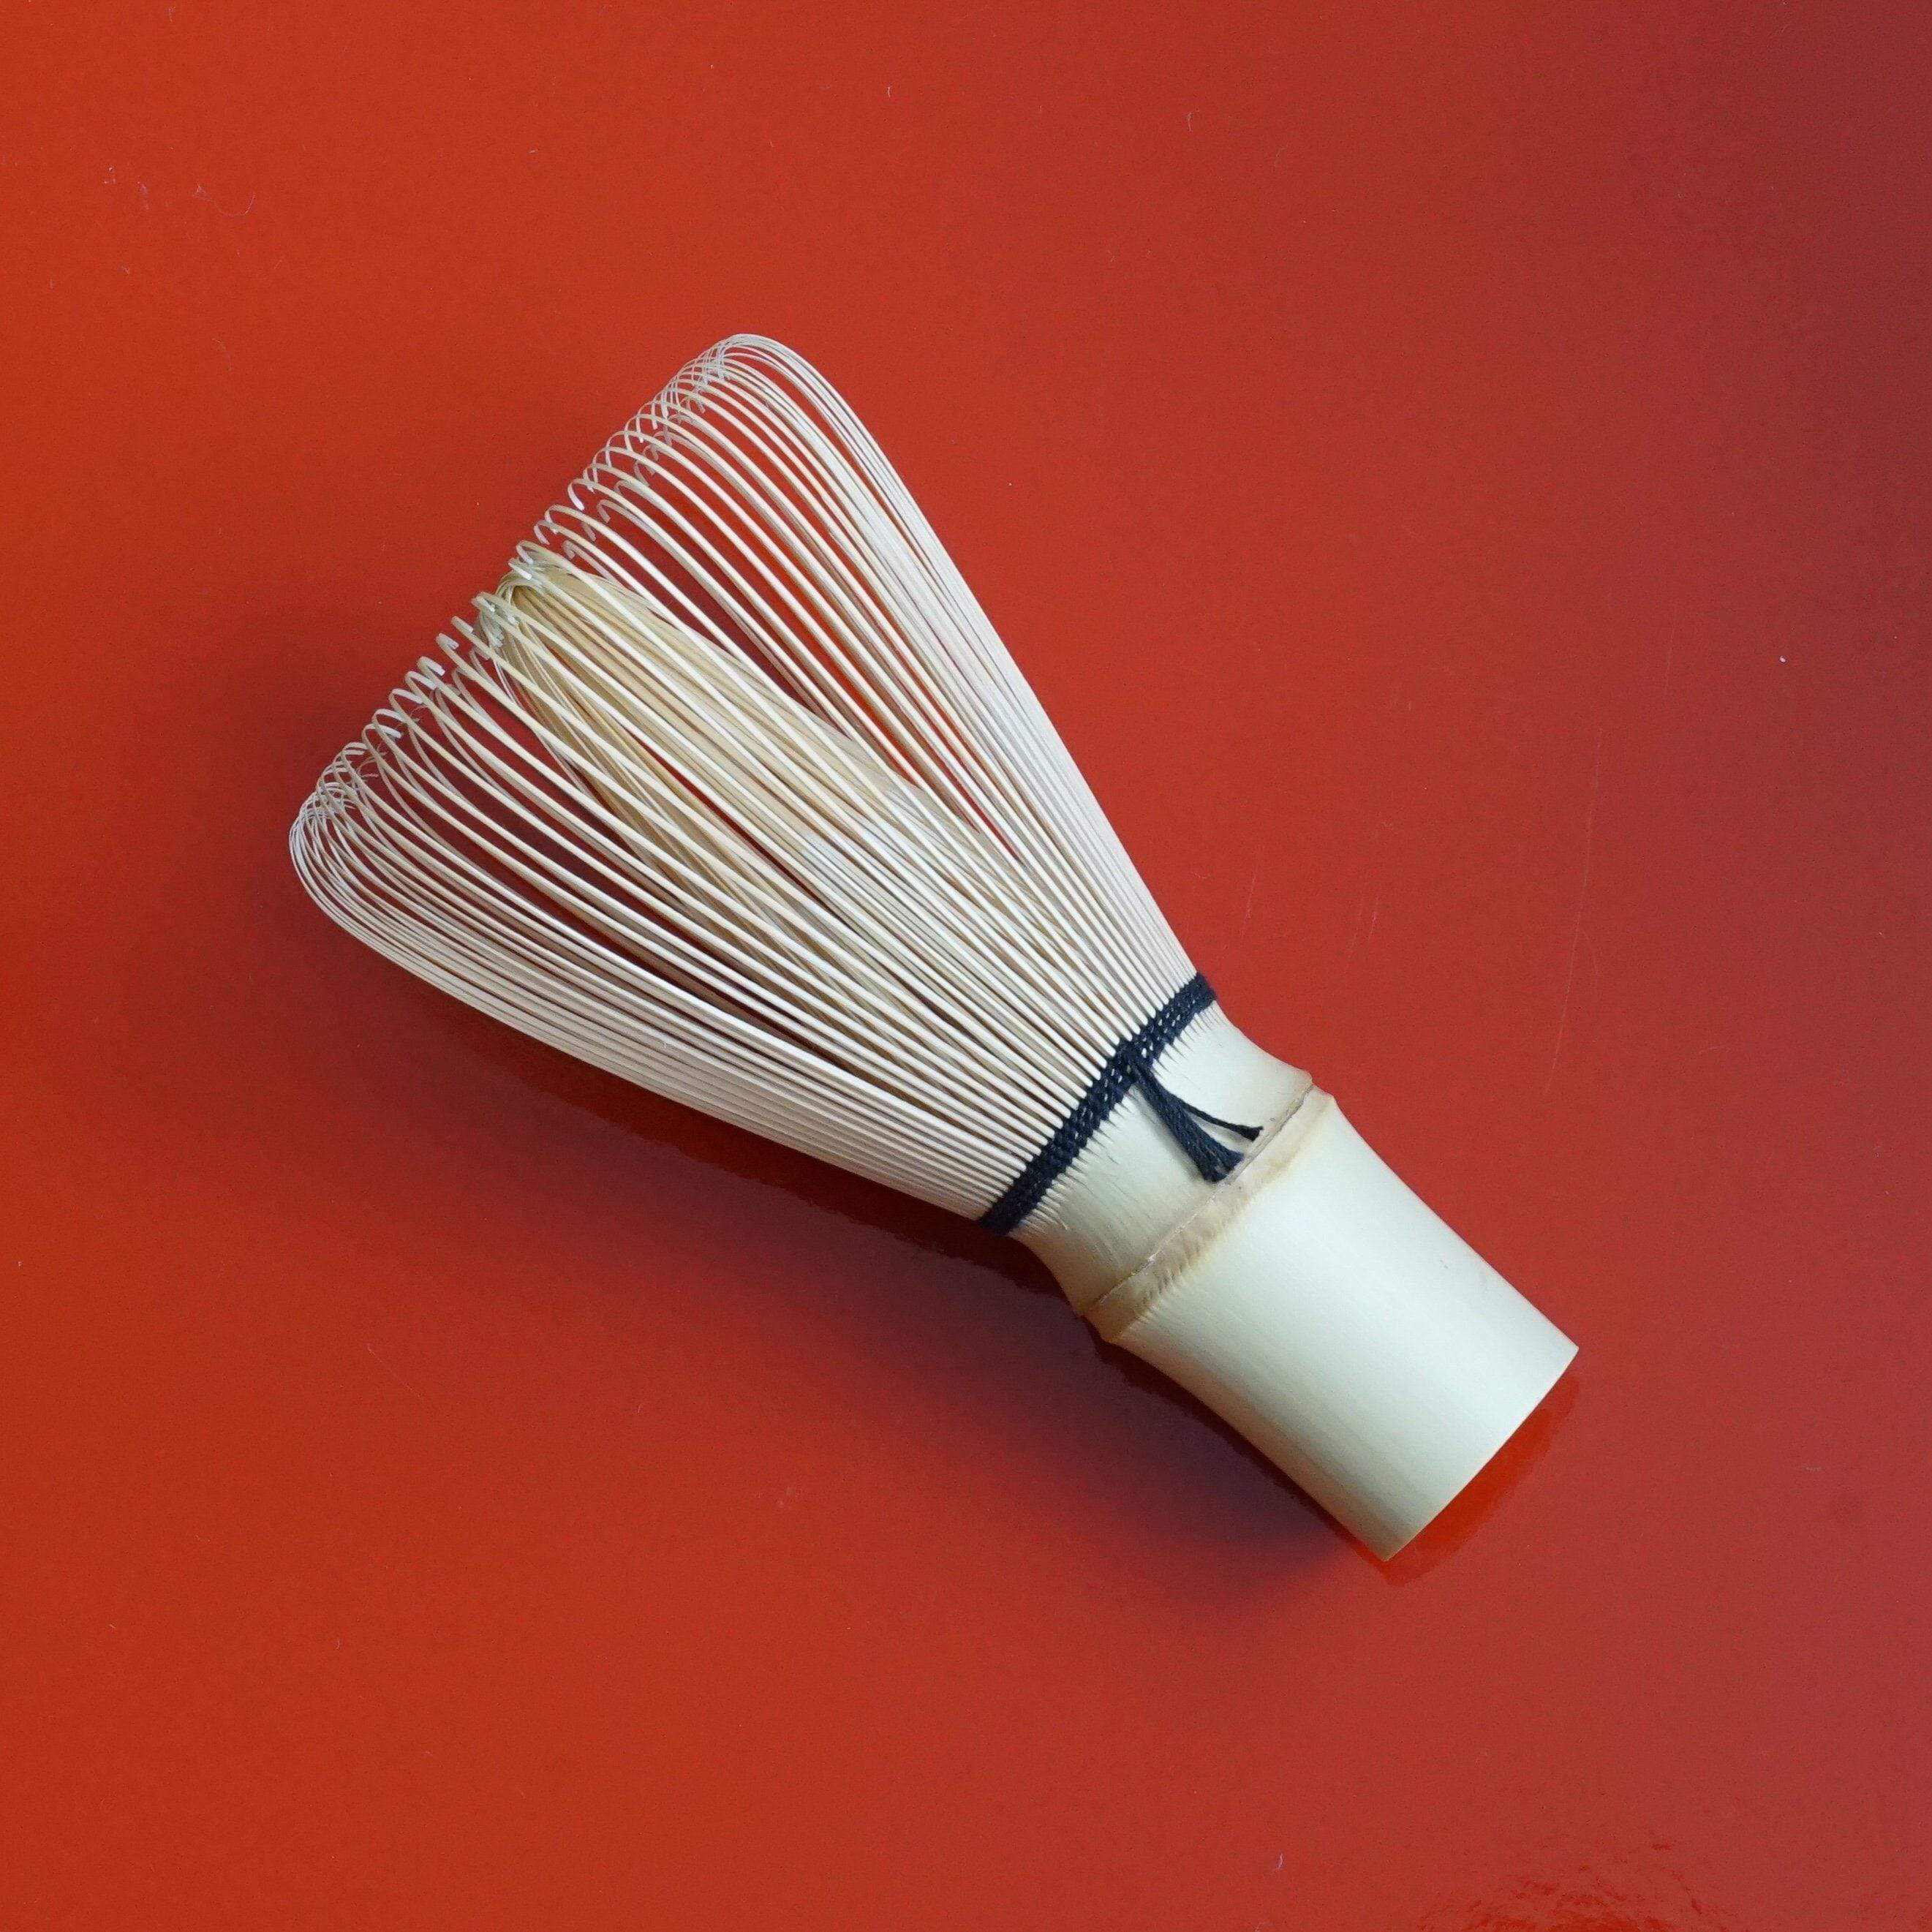 Matcha Whisk(Chasen ), Bamboo, original japanese, Item No. 8458 - TDS